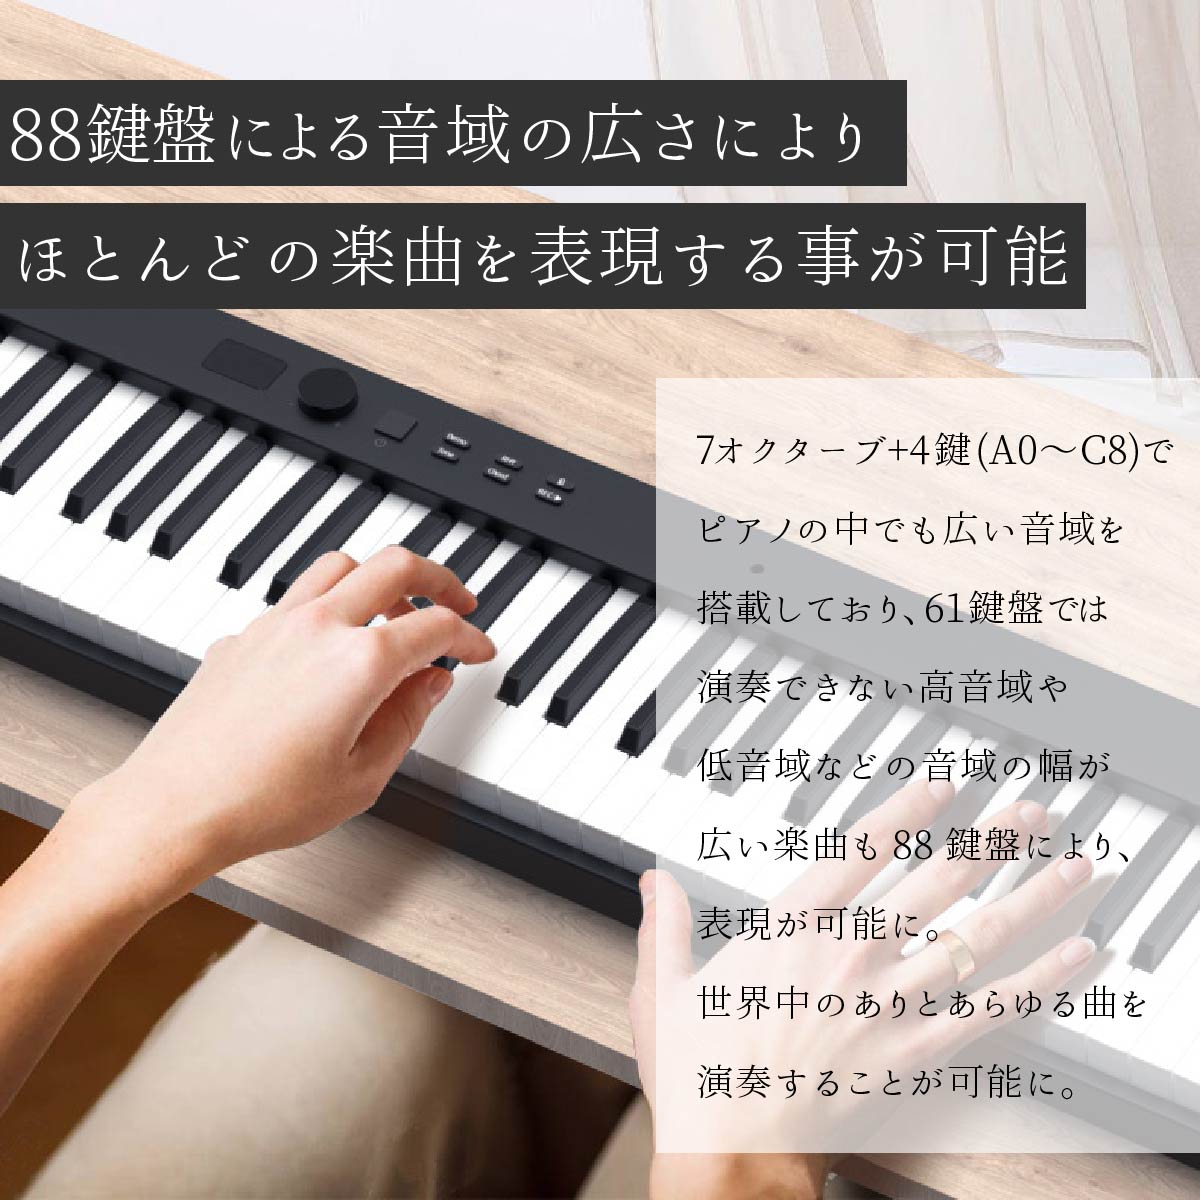  electronic piano 88 keyboard beginner piano keyboard piano debut MIDI Bluetooth folding carrying movement ... piano ..